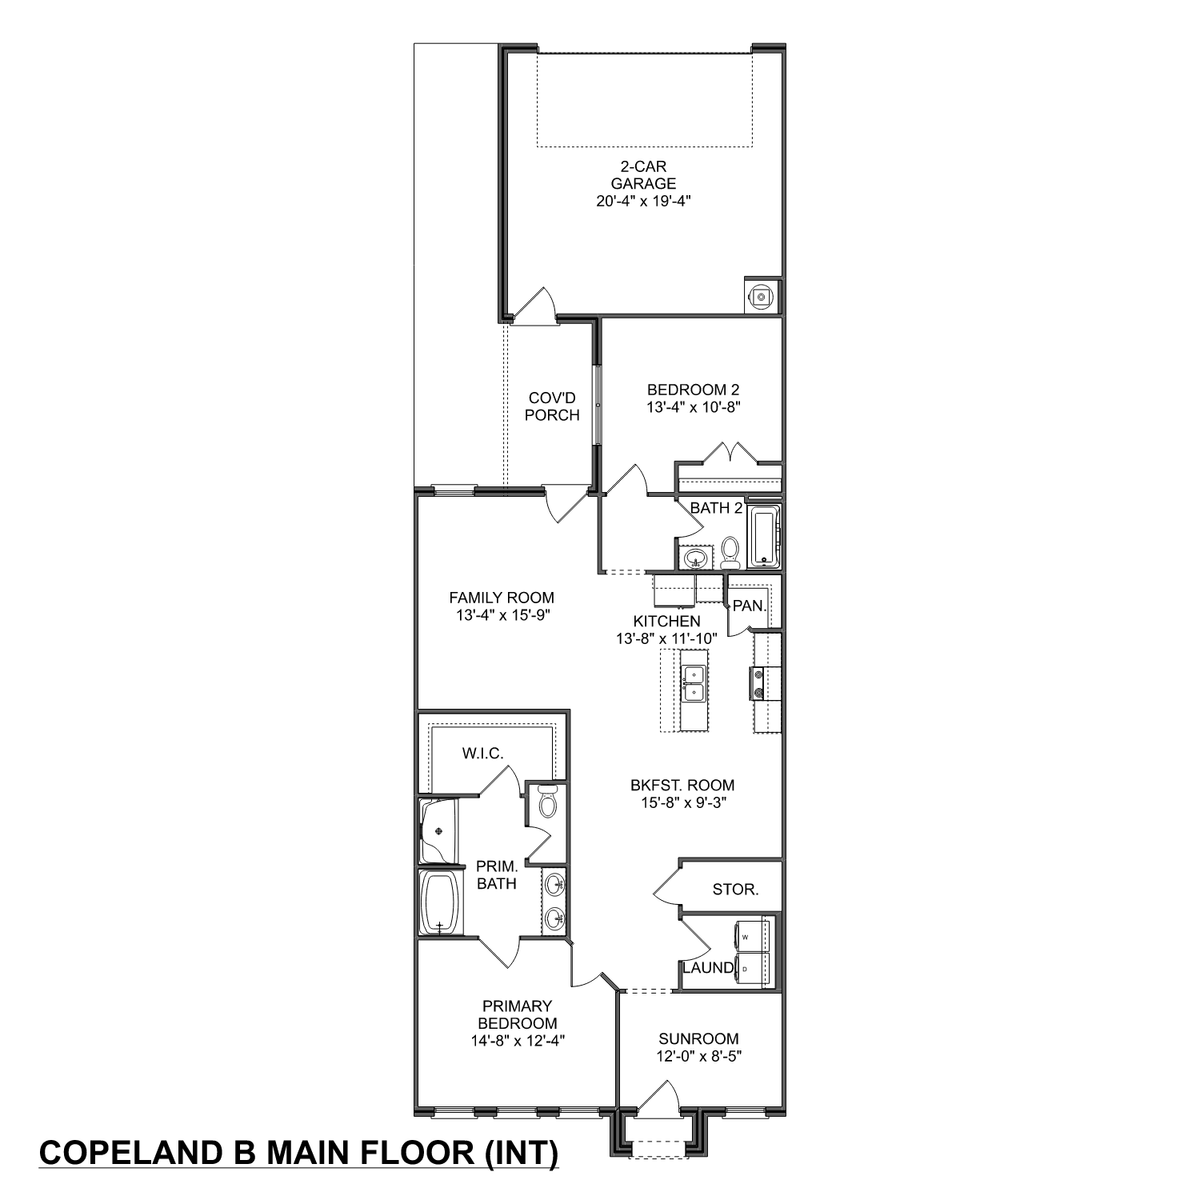 1 - The Copeland B floor plan layout for 104 Atkinson Alley in Davidson Homes' Barnett's Crossing community.